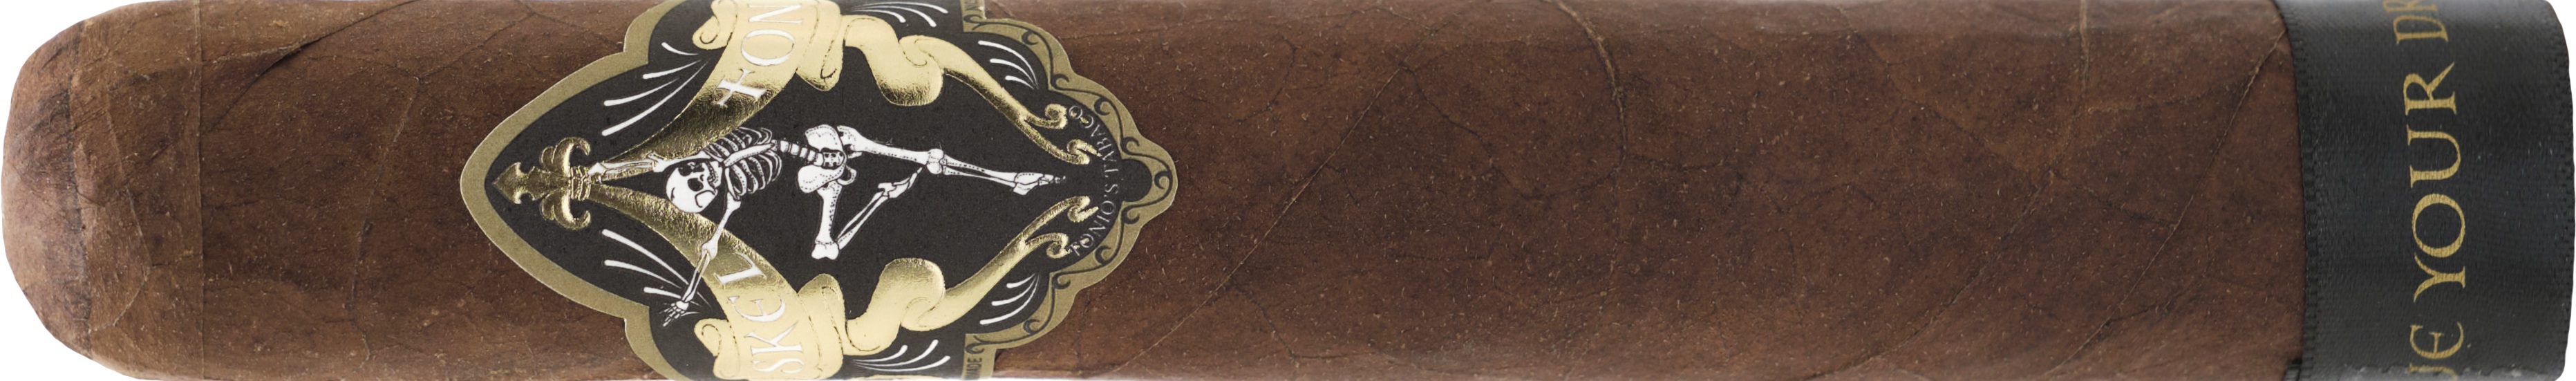 SkelTon Zigarren Gordo (Verpackungseinheit: 1er)